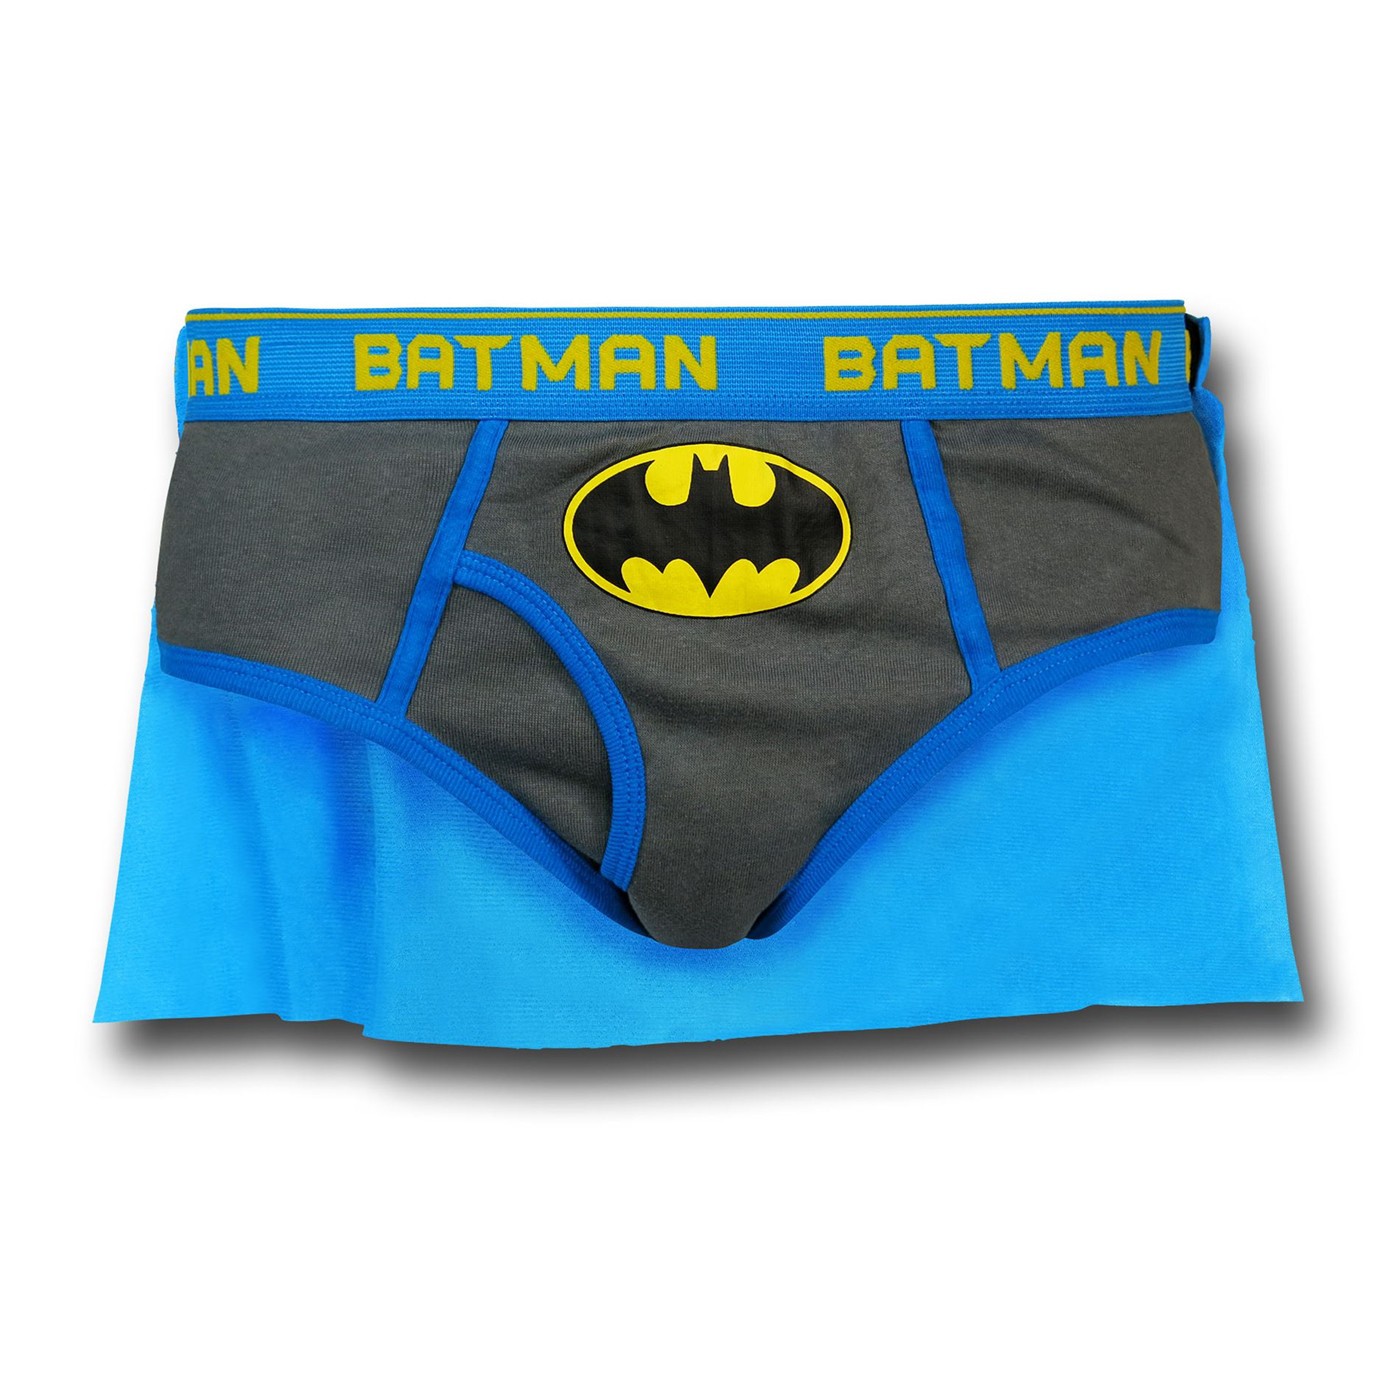 Men's Batman Boxers in a Tin